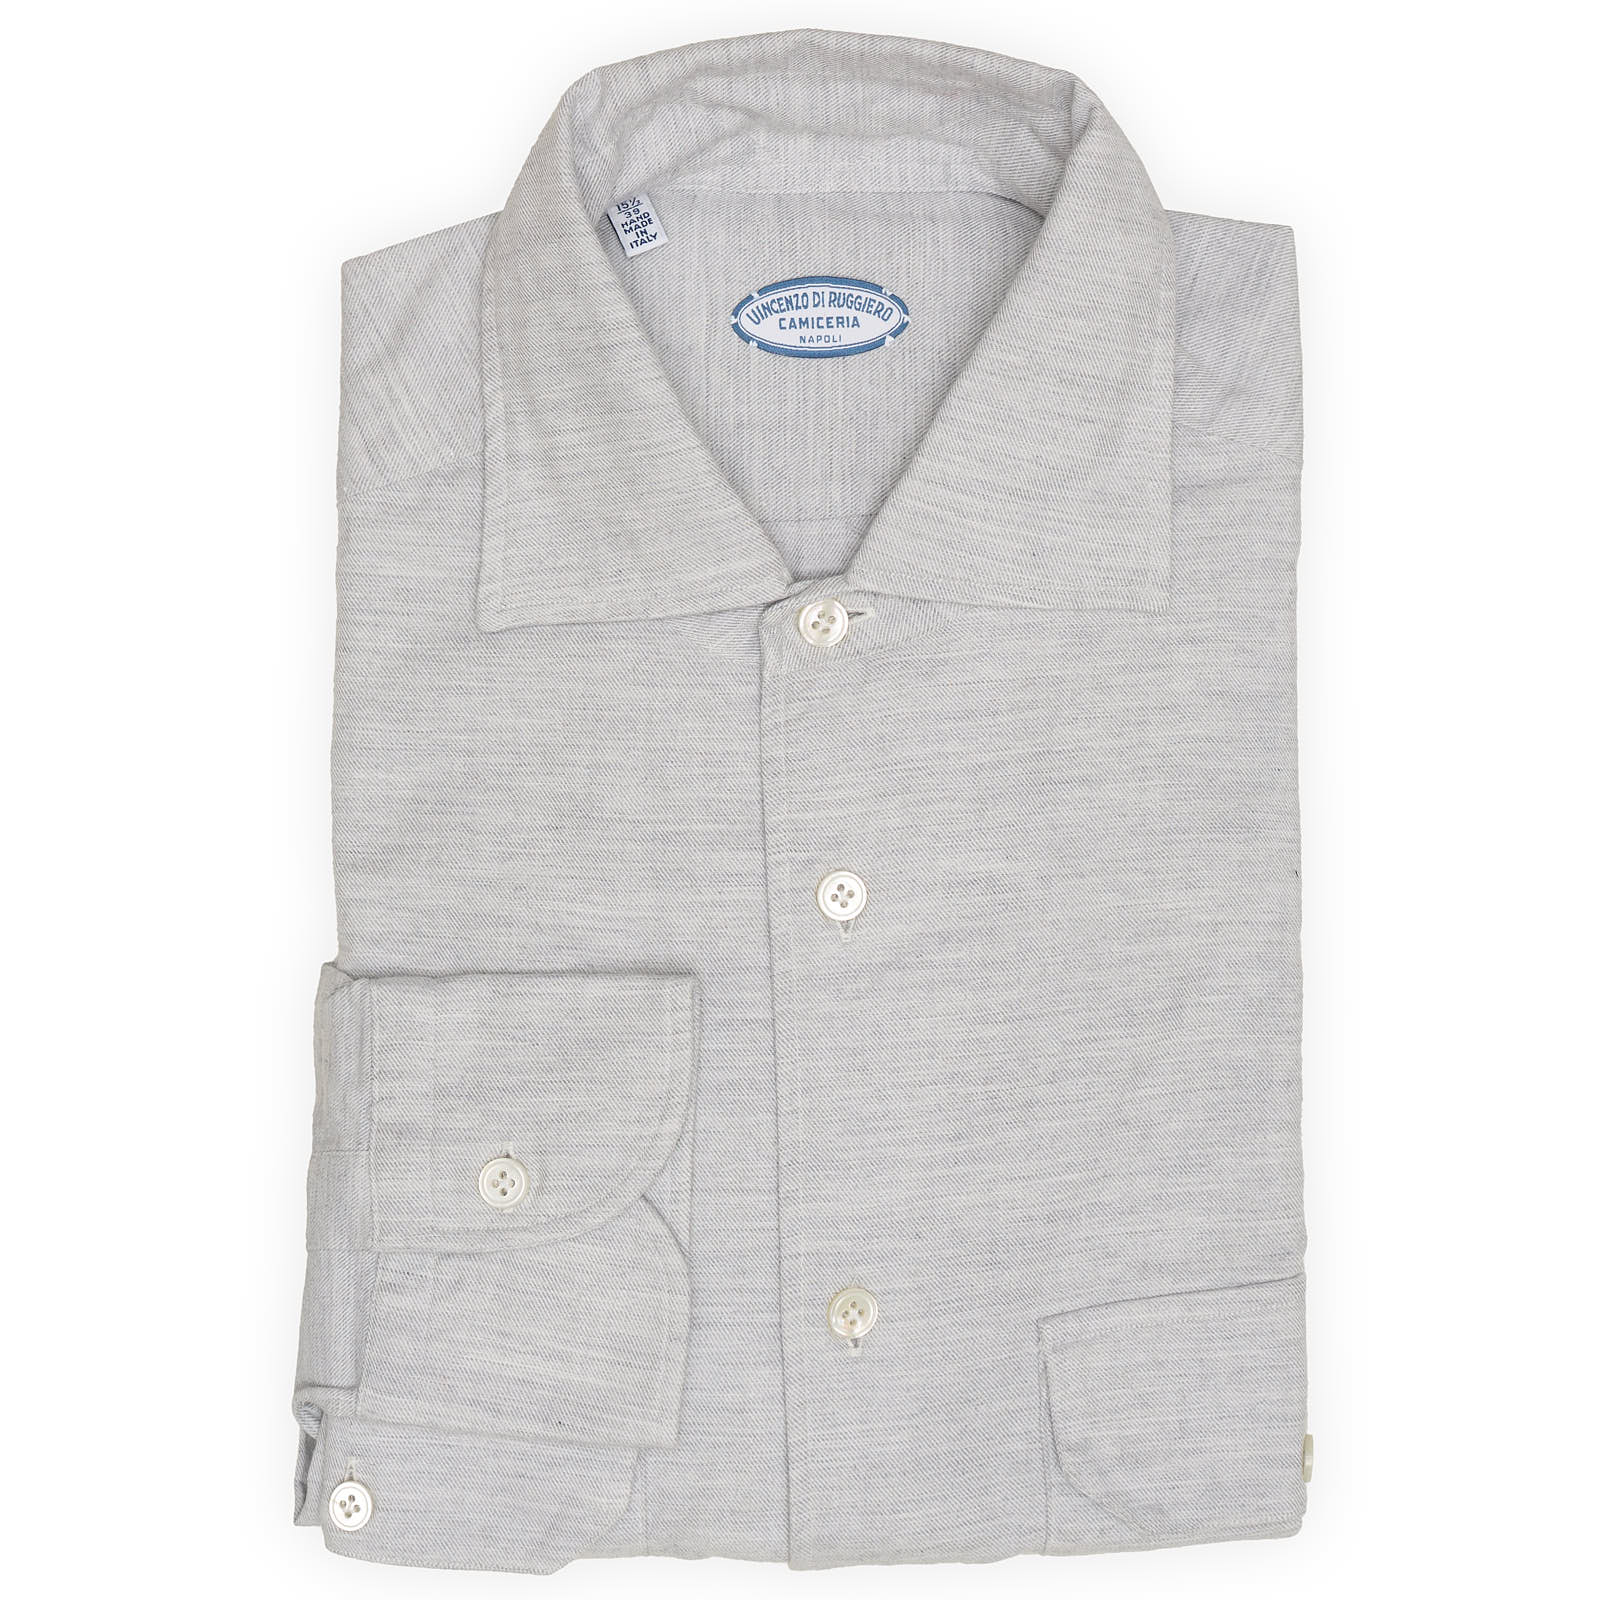 VINCENZO DI RUGGIERO Handmade Gray Twill Cotton Dress Shirt Shirt EU 39 NEW US 15.5